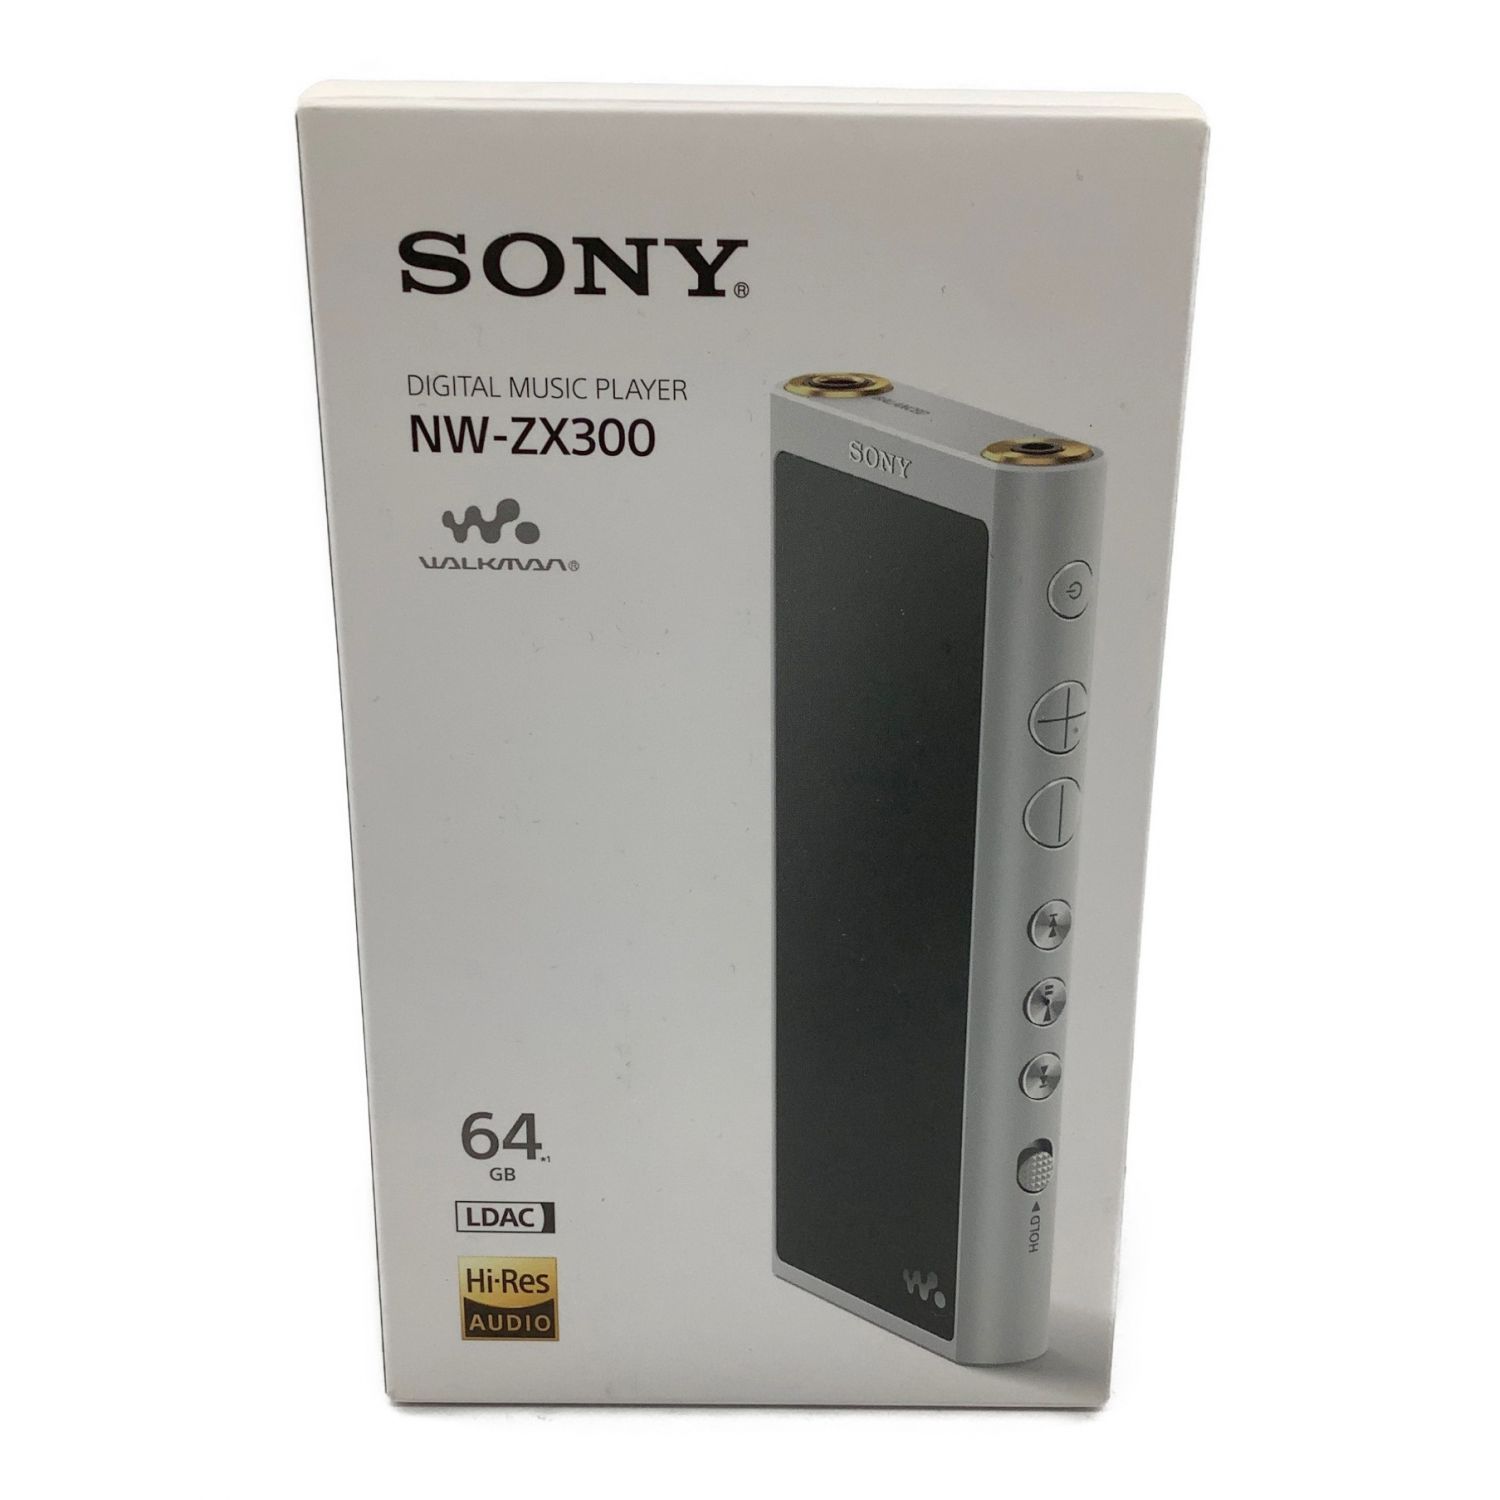 SONY (ソニー) ハイレゾ対応WALKMAN 64GB NW-ZX300 5093257 ...